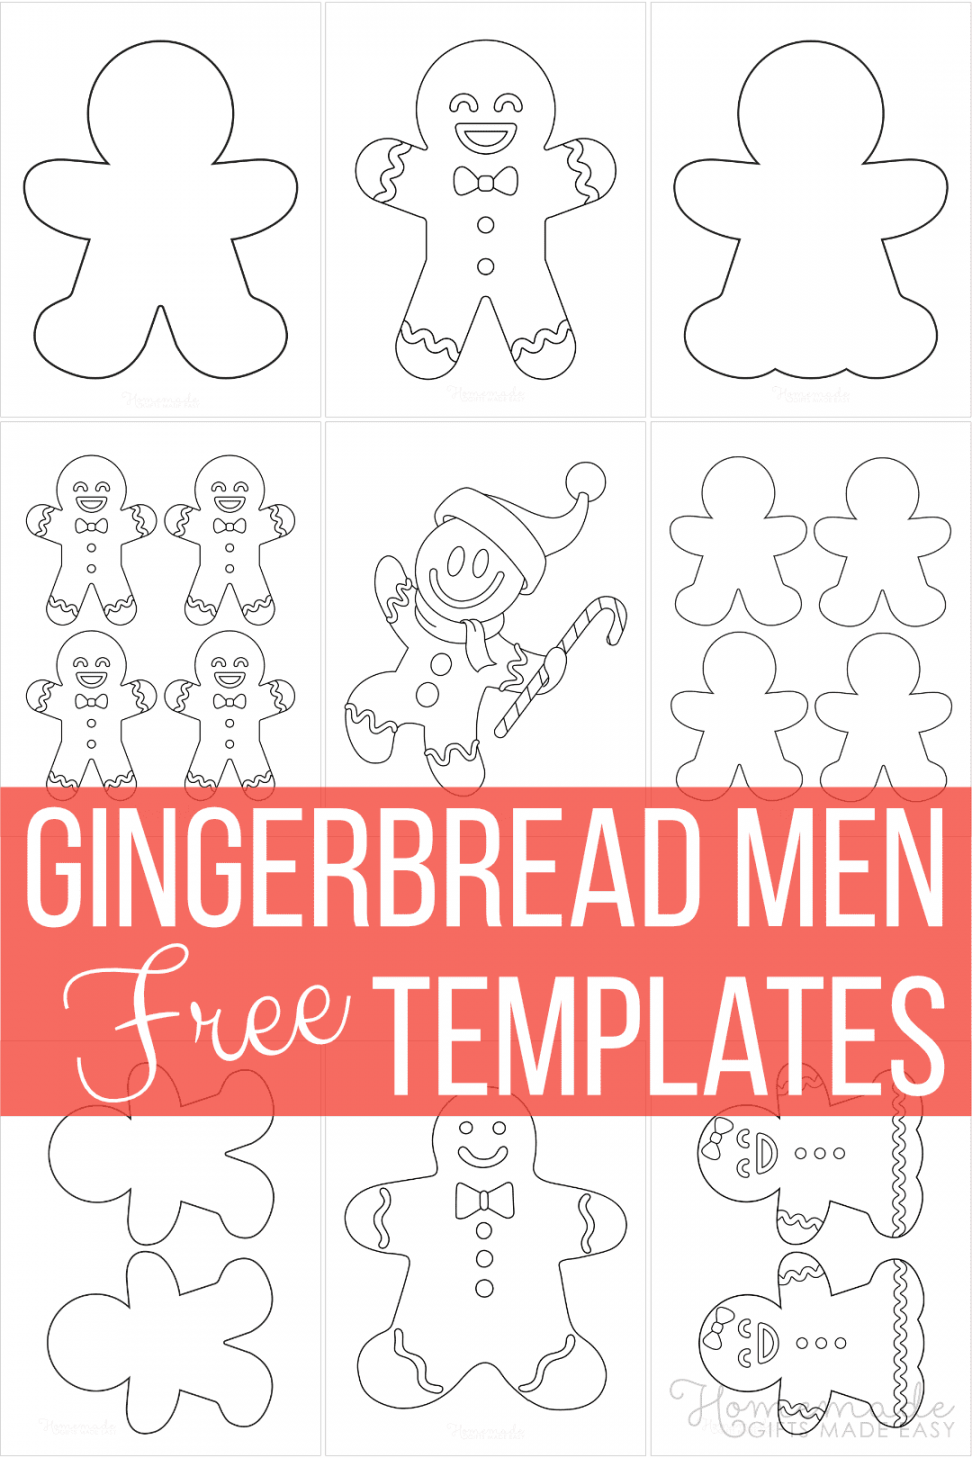 Free Printable Gingerbread Man Templates & Coloring Pages - FREE Printables - Gingerbread Outline Printable